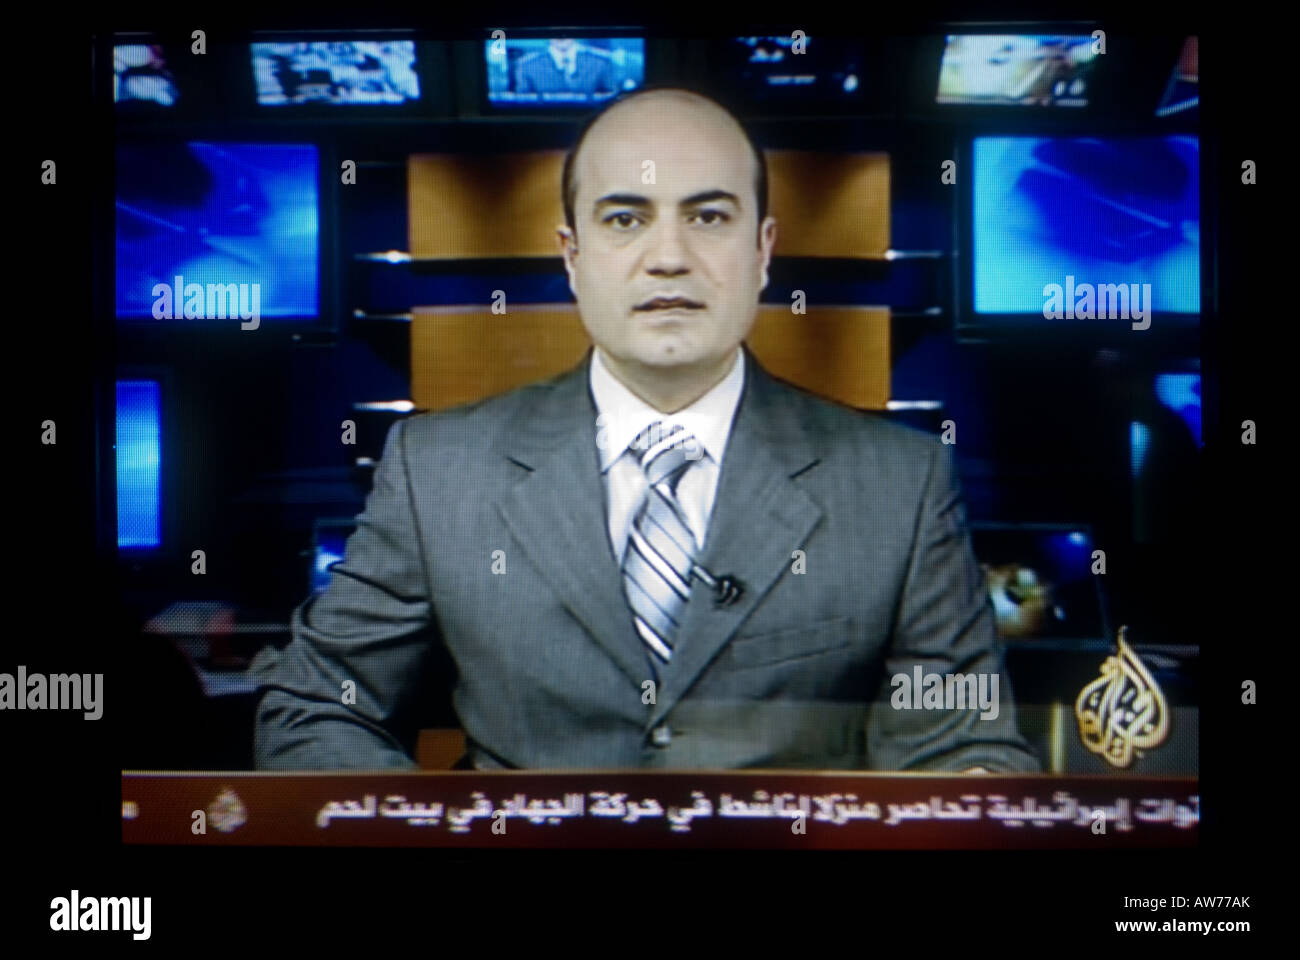 TV screen shot of a news anchor broadcasting live on Al Jazeera' also Aljazeera or JSC Stock Photo